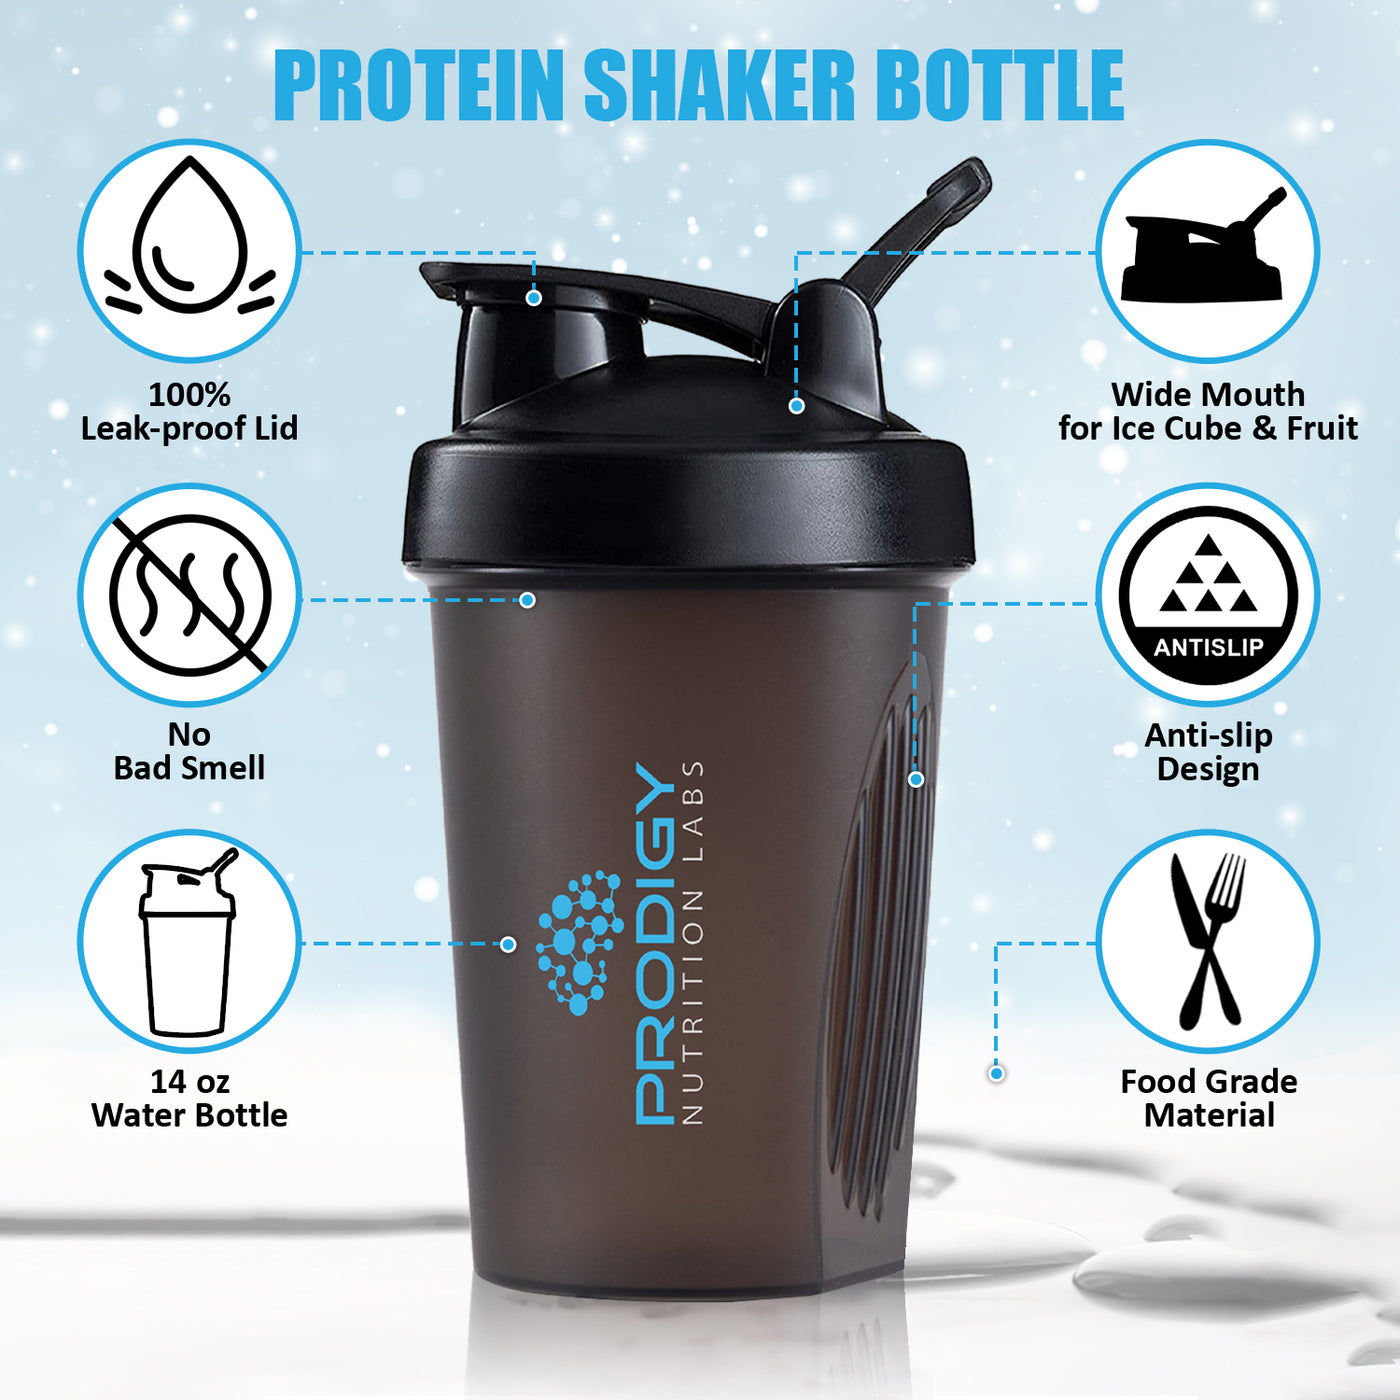 14oz Prodigy Shaker Bottle Black, Blue, White, Pink – Prodigy Nutrition Labs